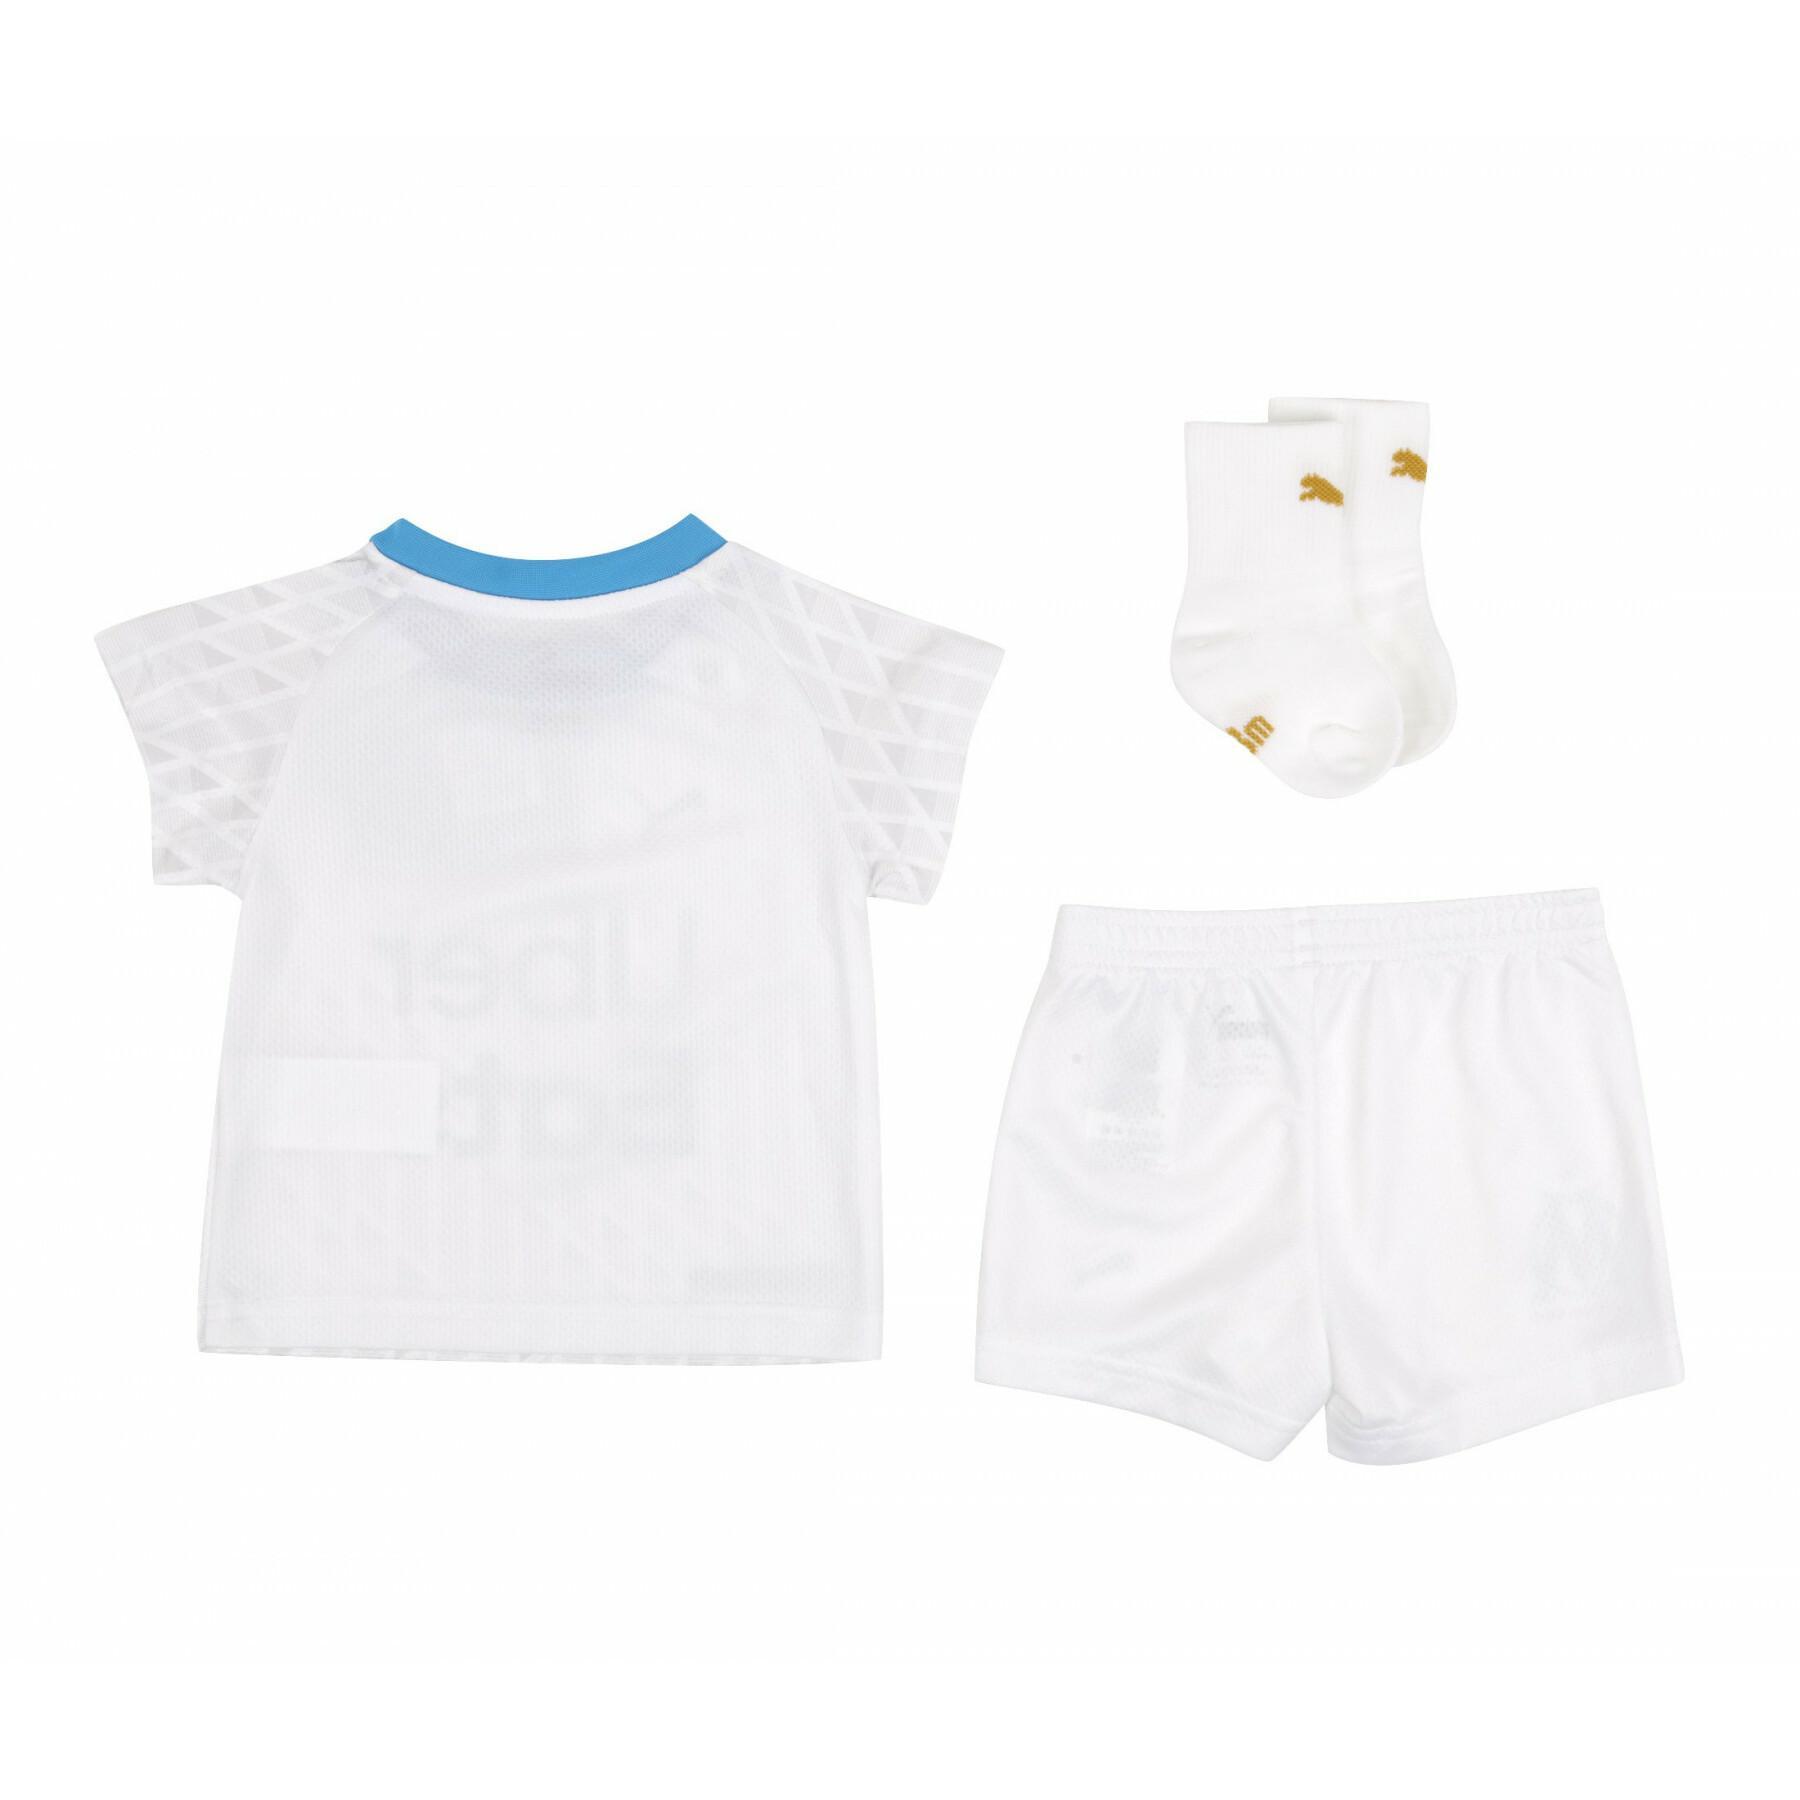 Abbigliamento home bambino OM bambinokit 2020/21